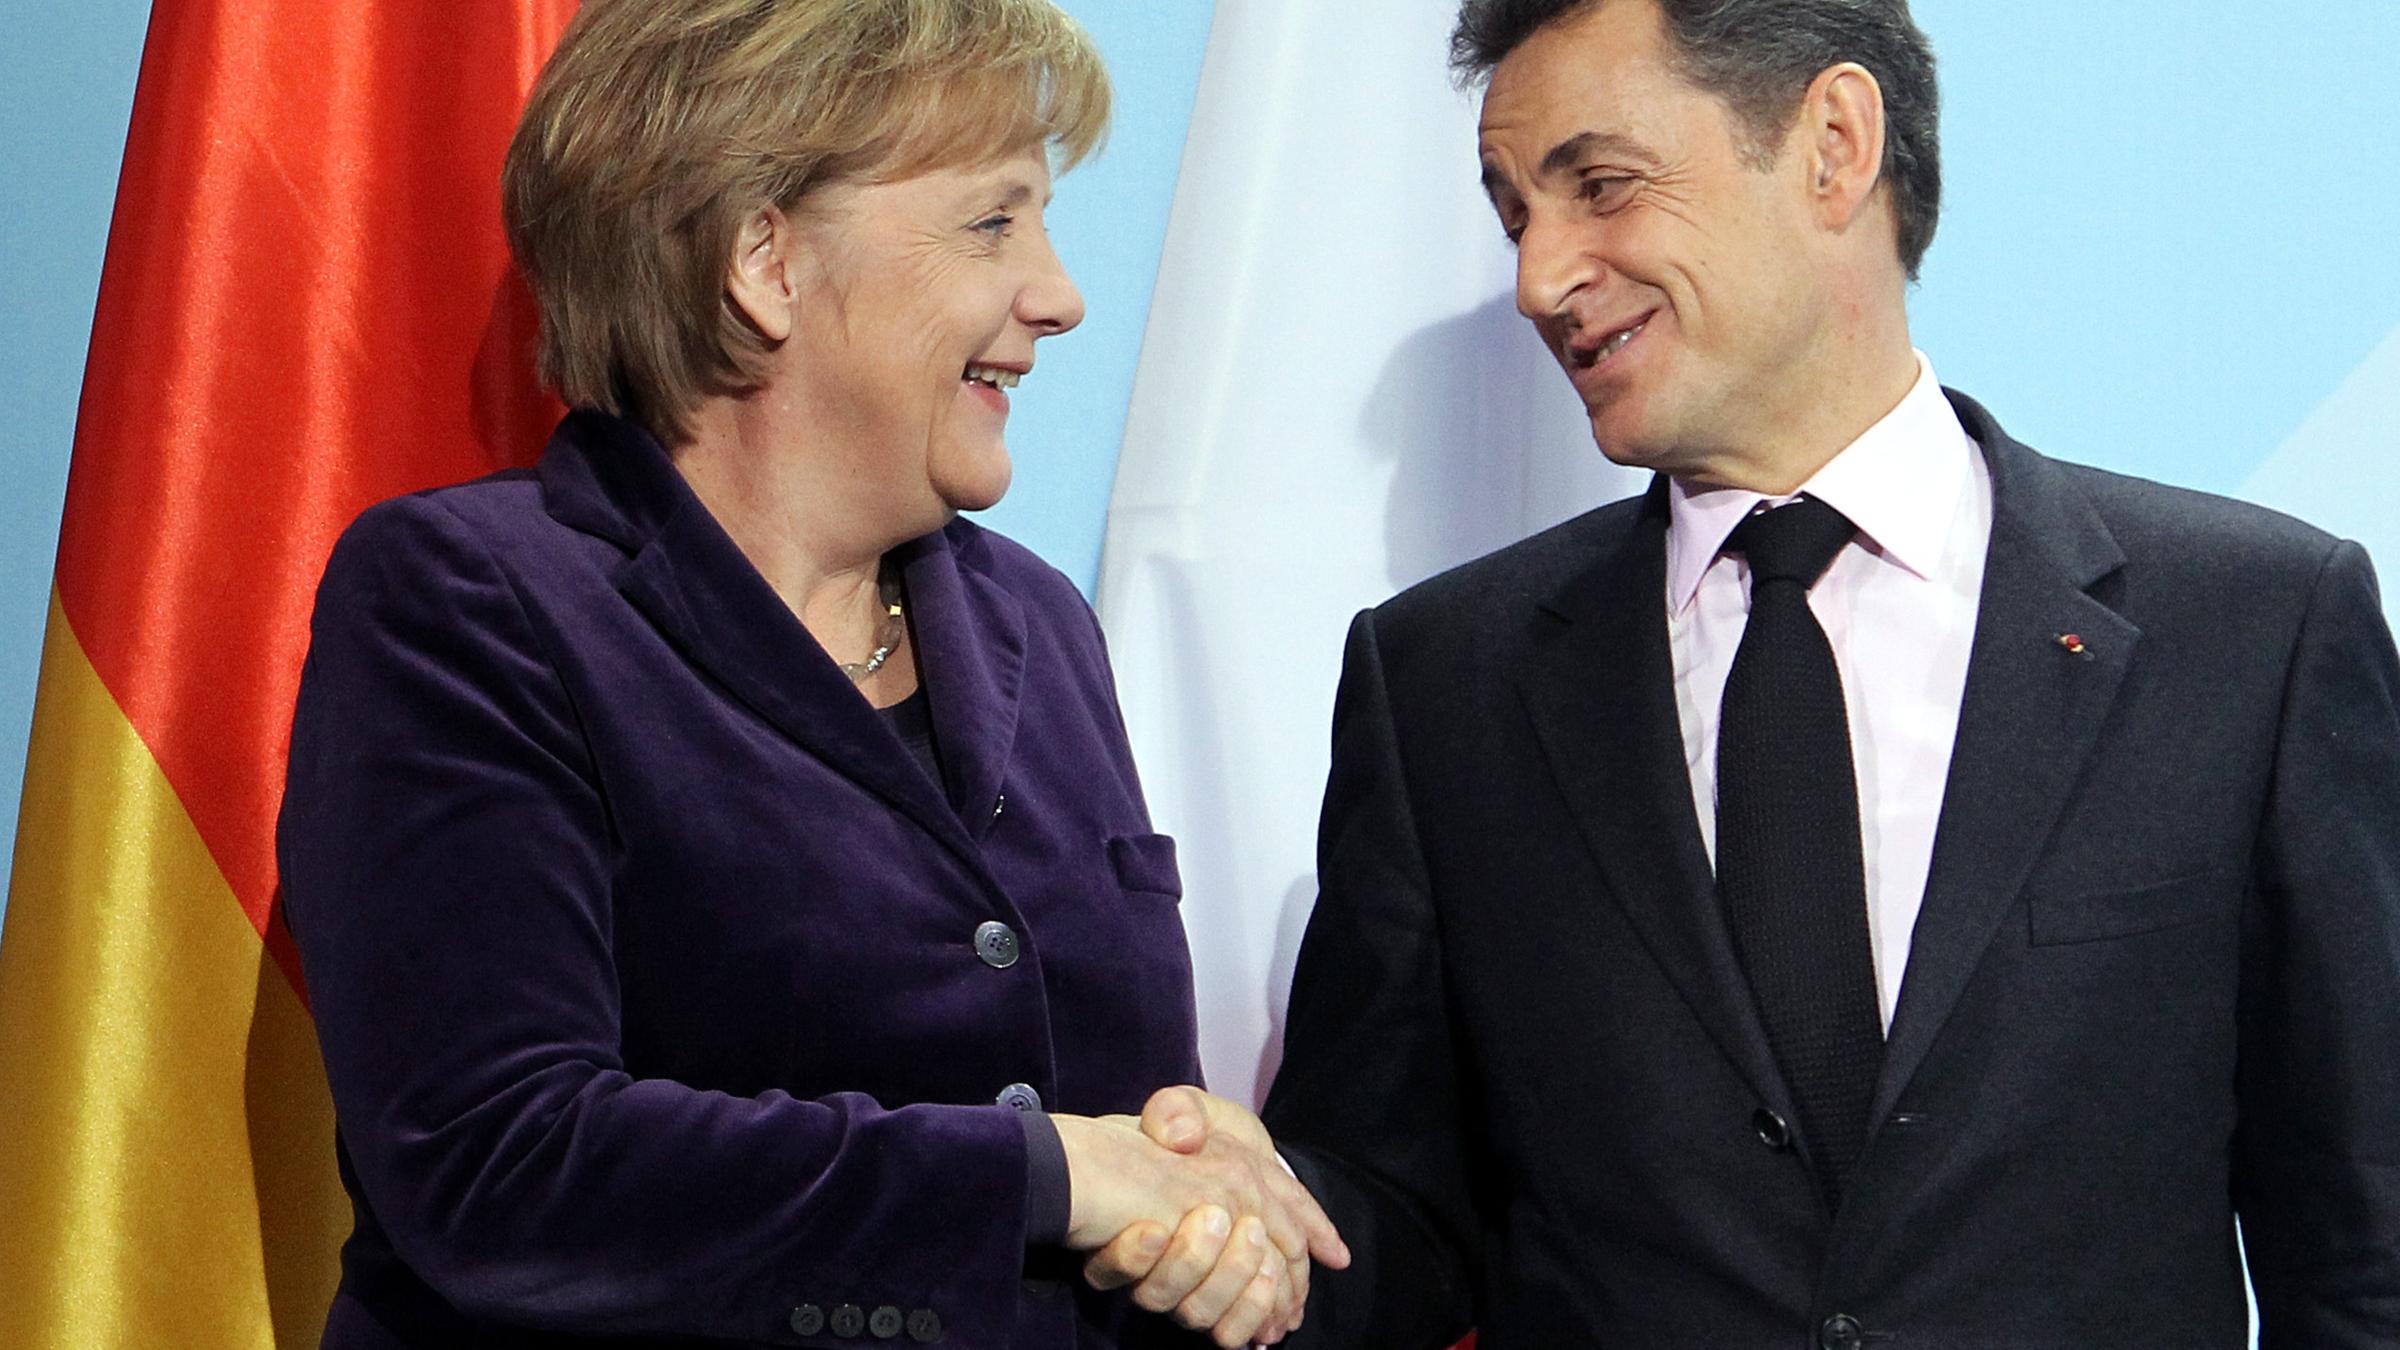 Archiv: Angela Merkel und Nicolas Sarkozy am 09.01.2012 in Berlin